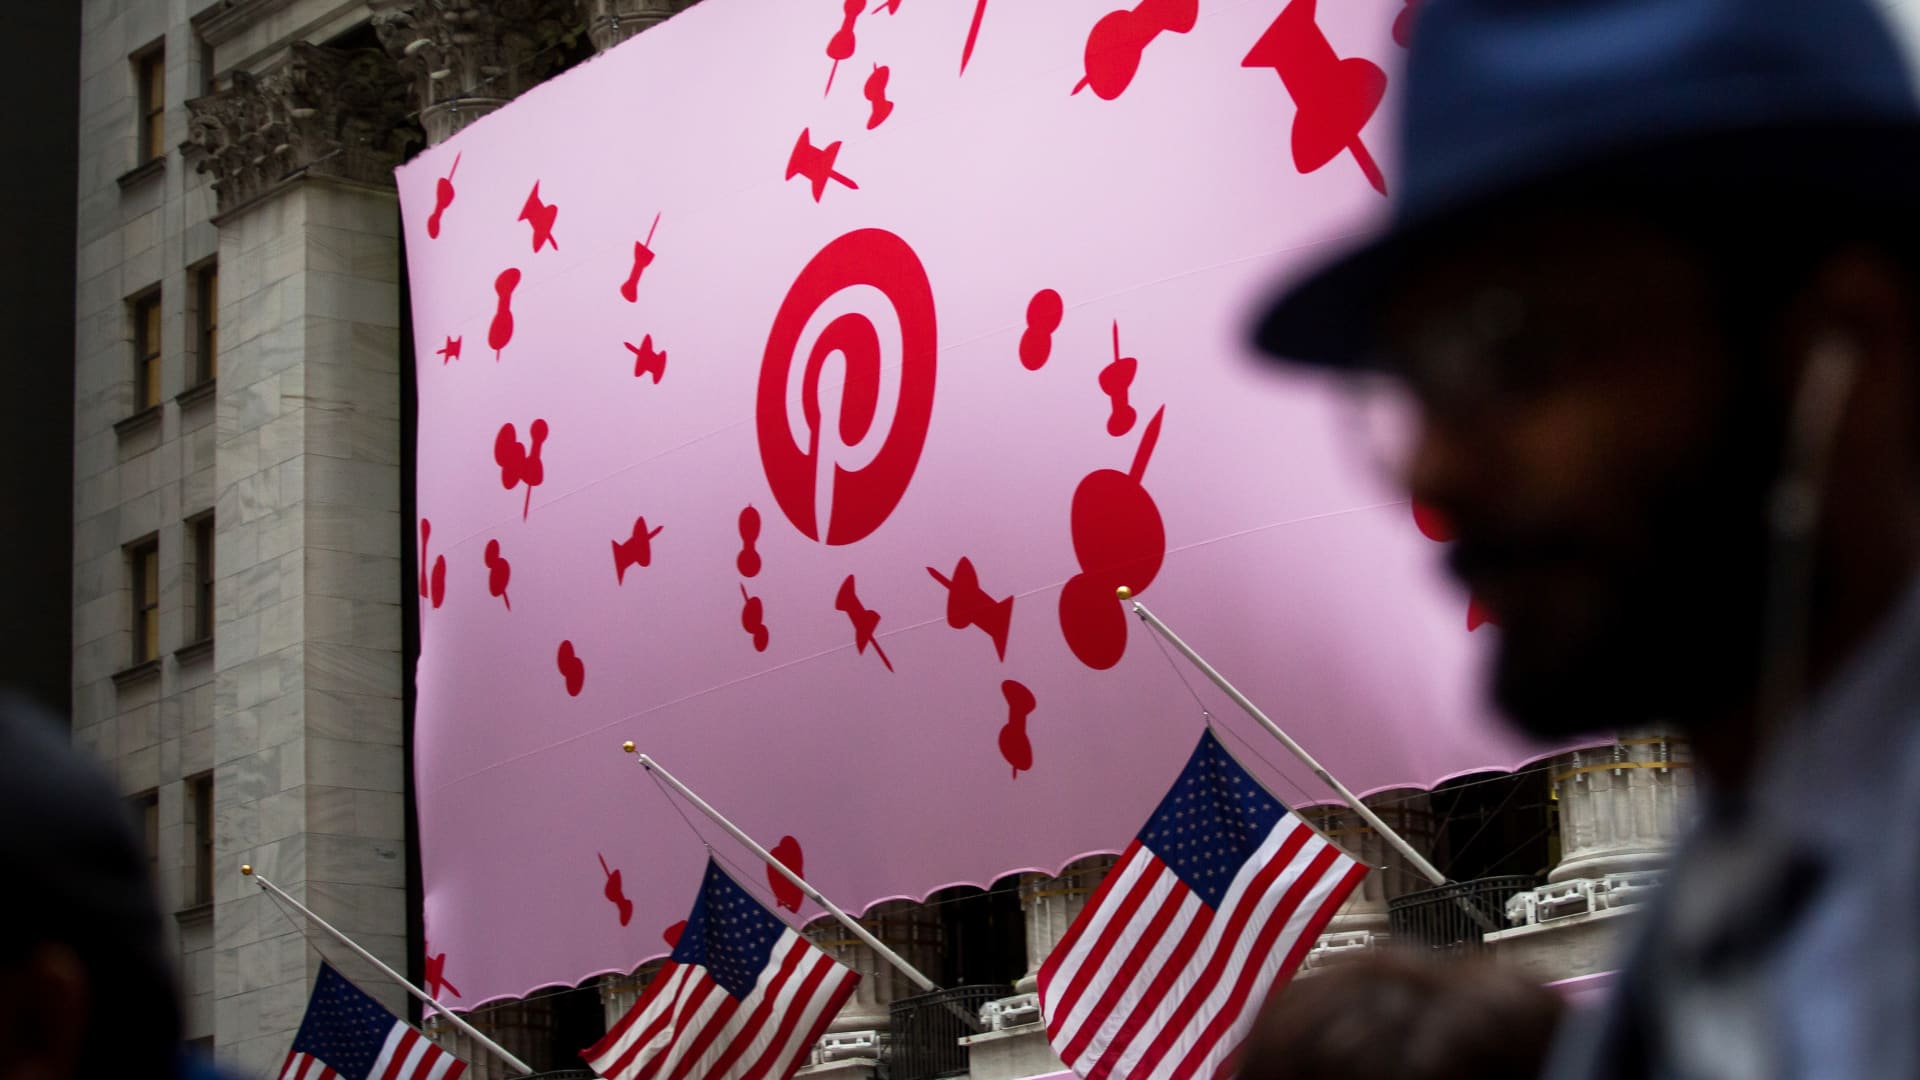 Pinterest shares soar on third-quarter revenue beat